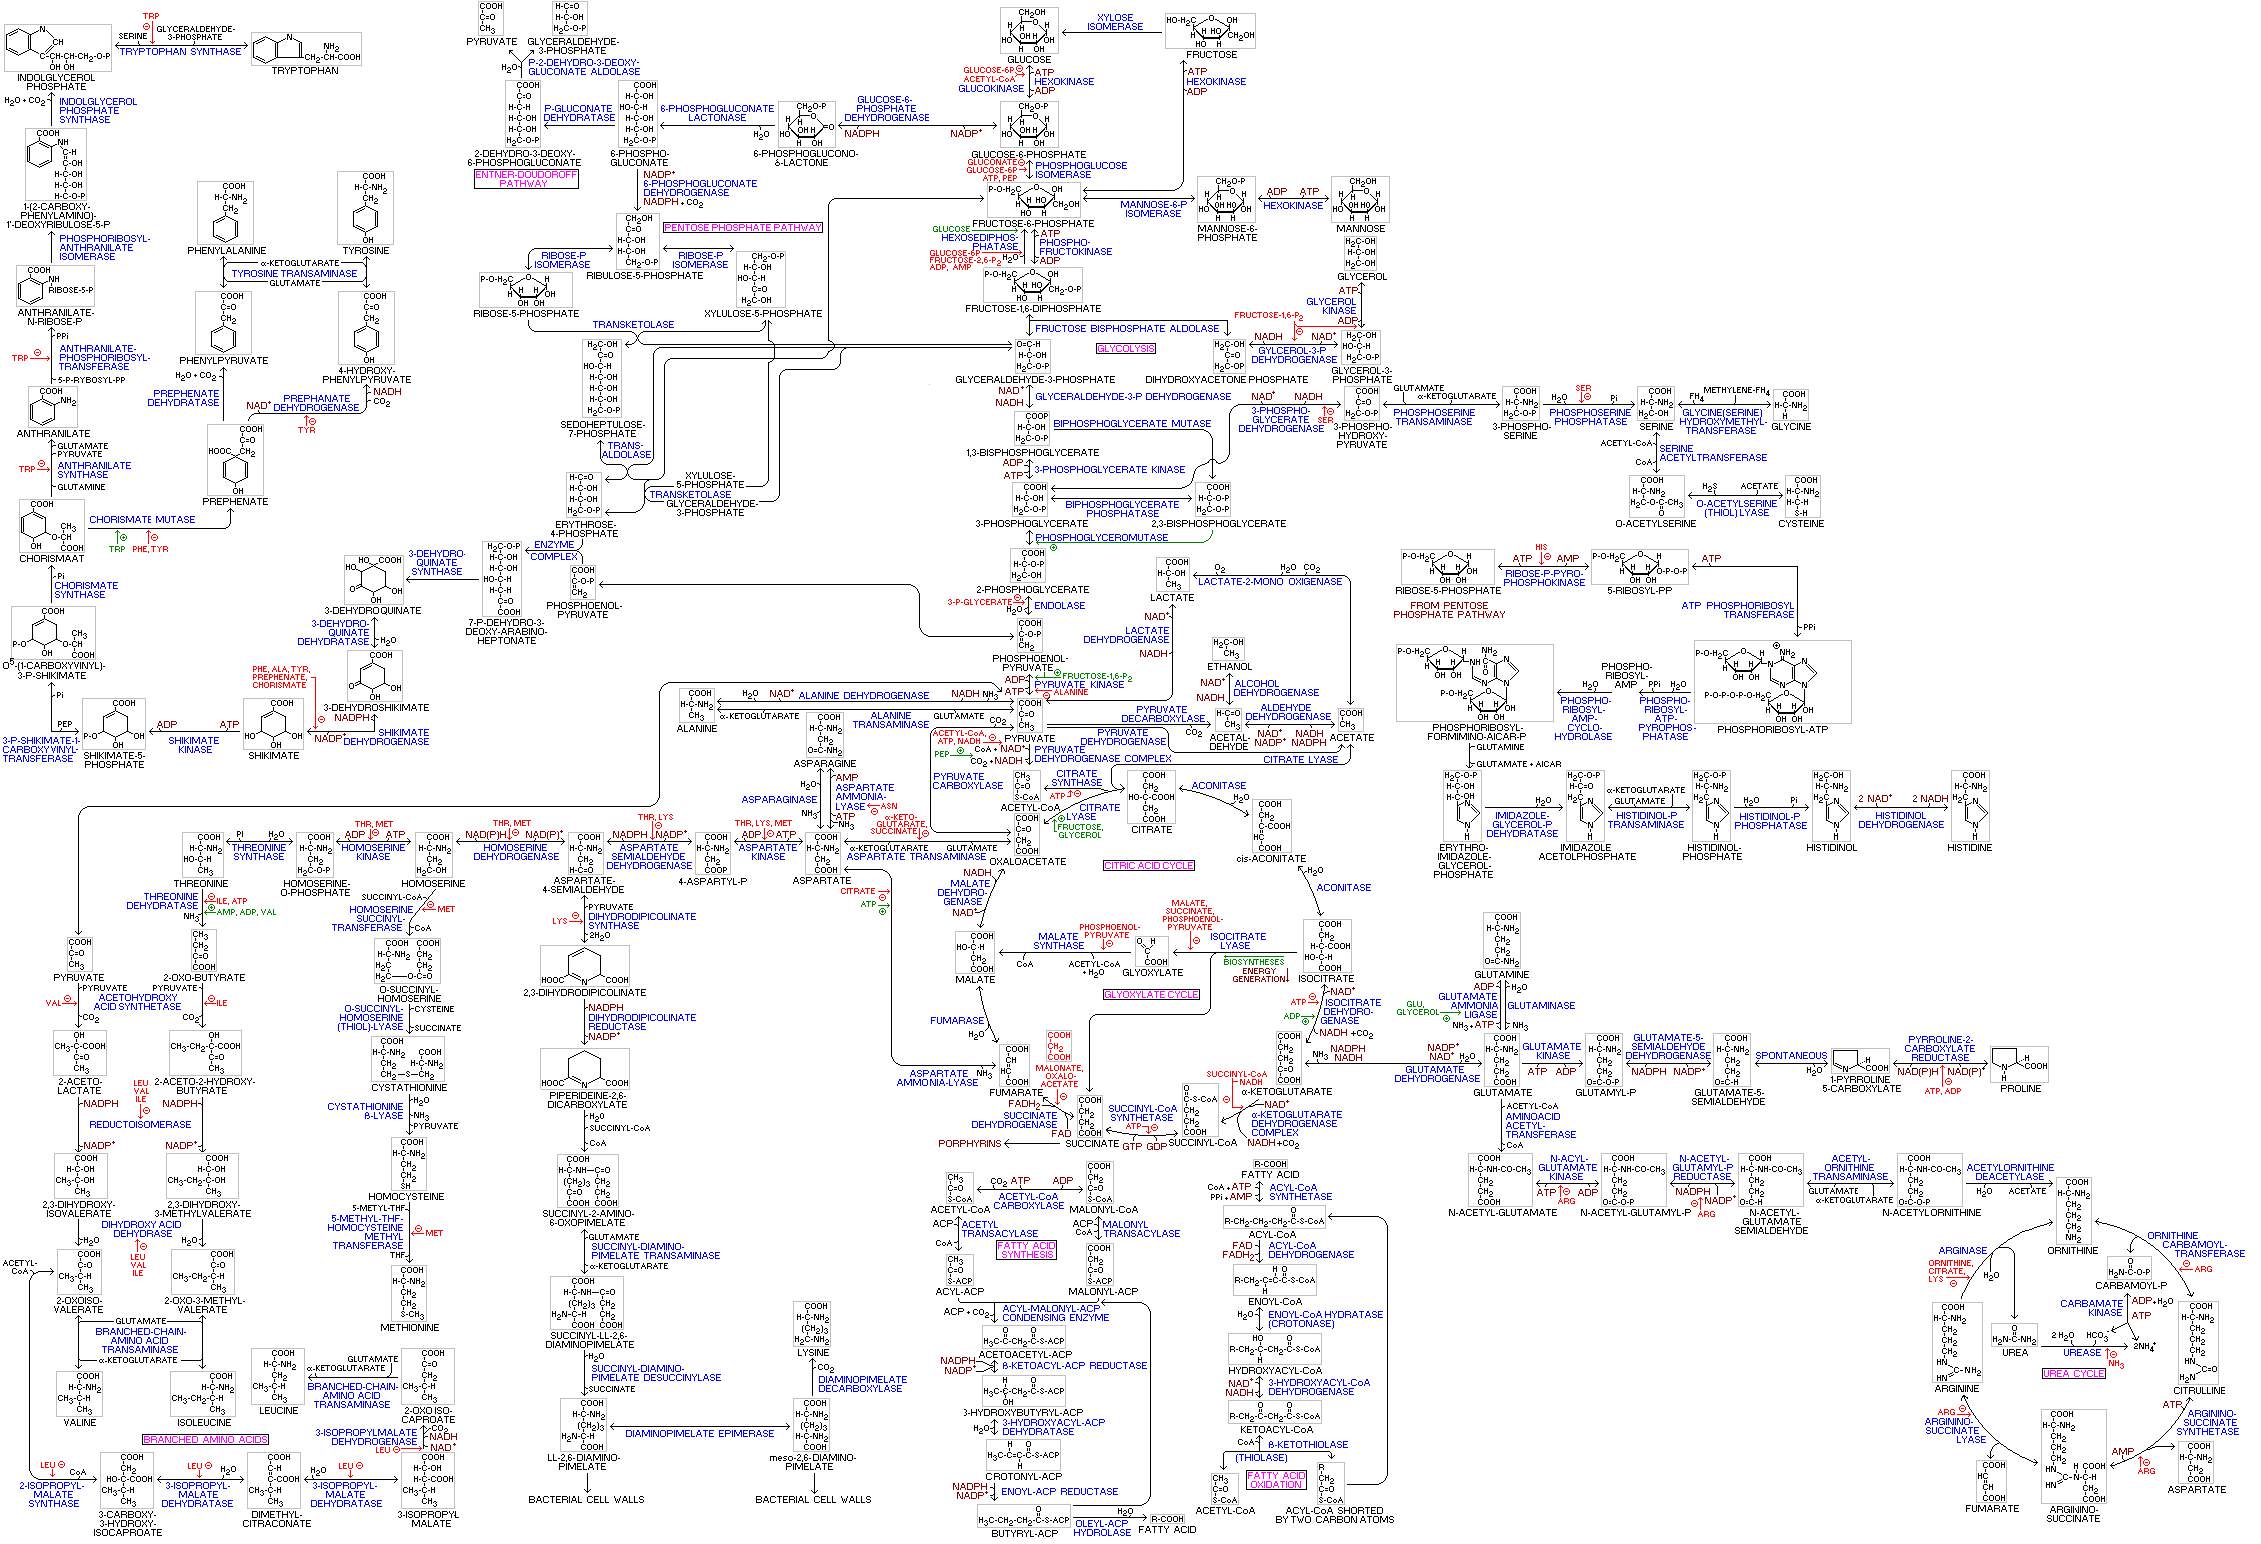 Biochemical Pathways Chart